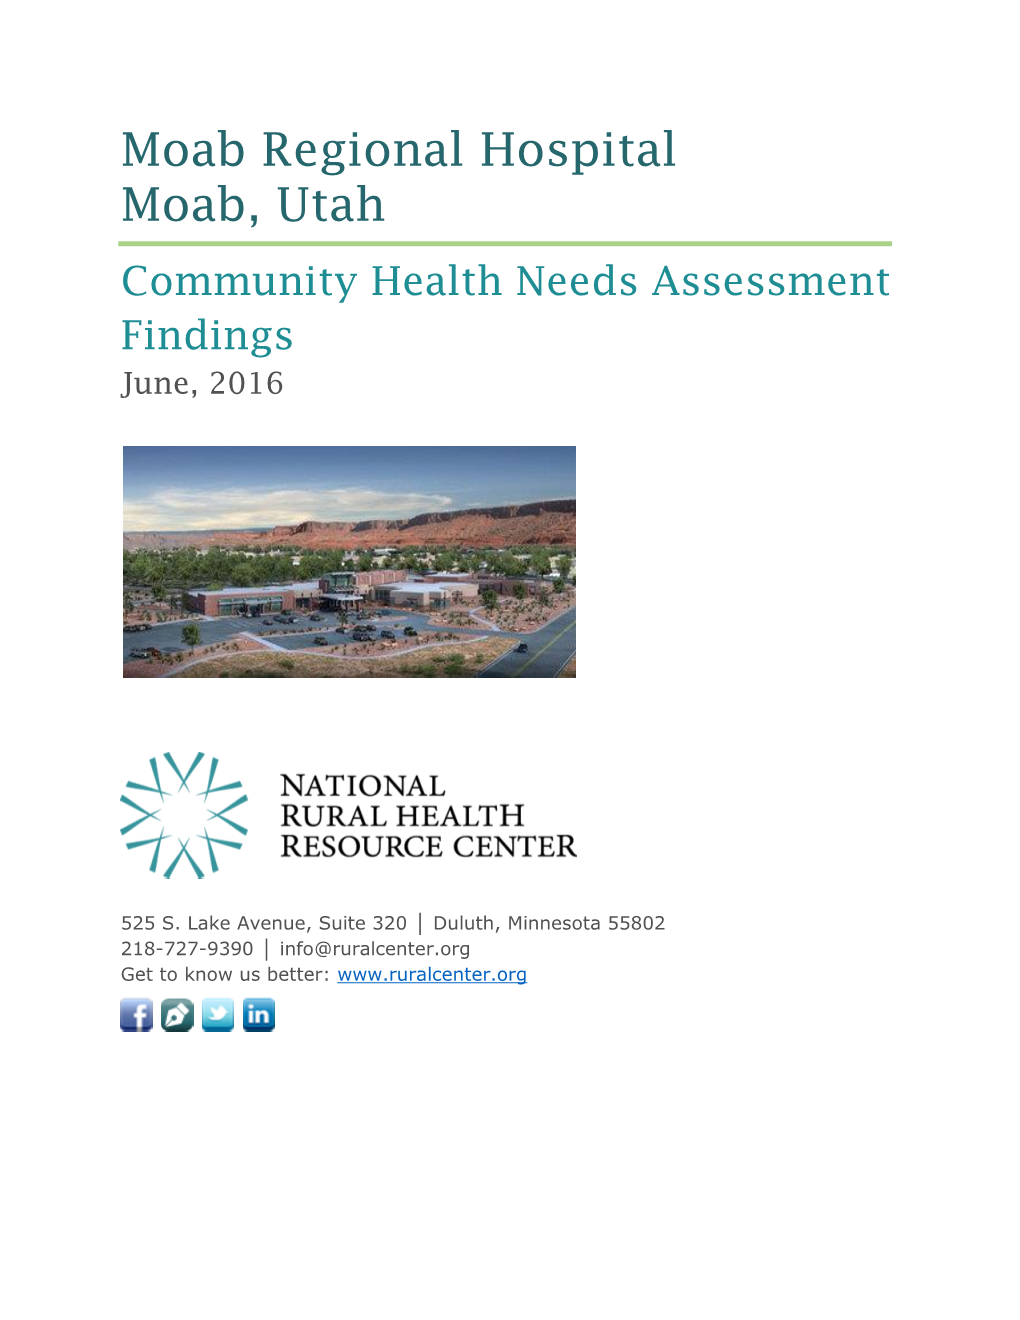 Moab Regional Hospital Moab, Utah